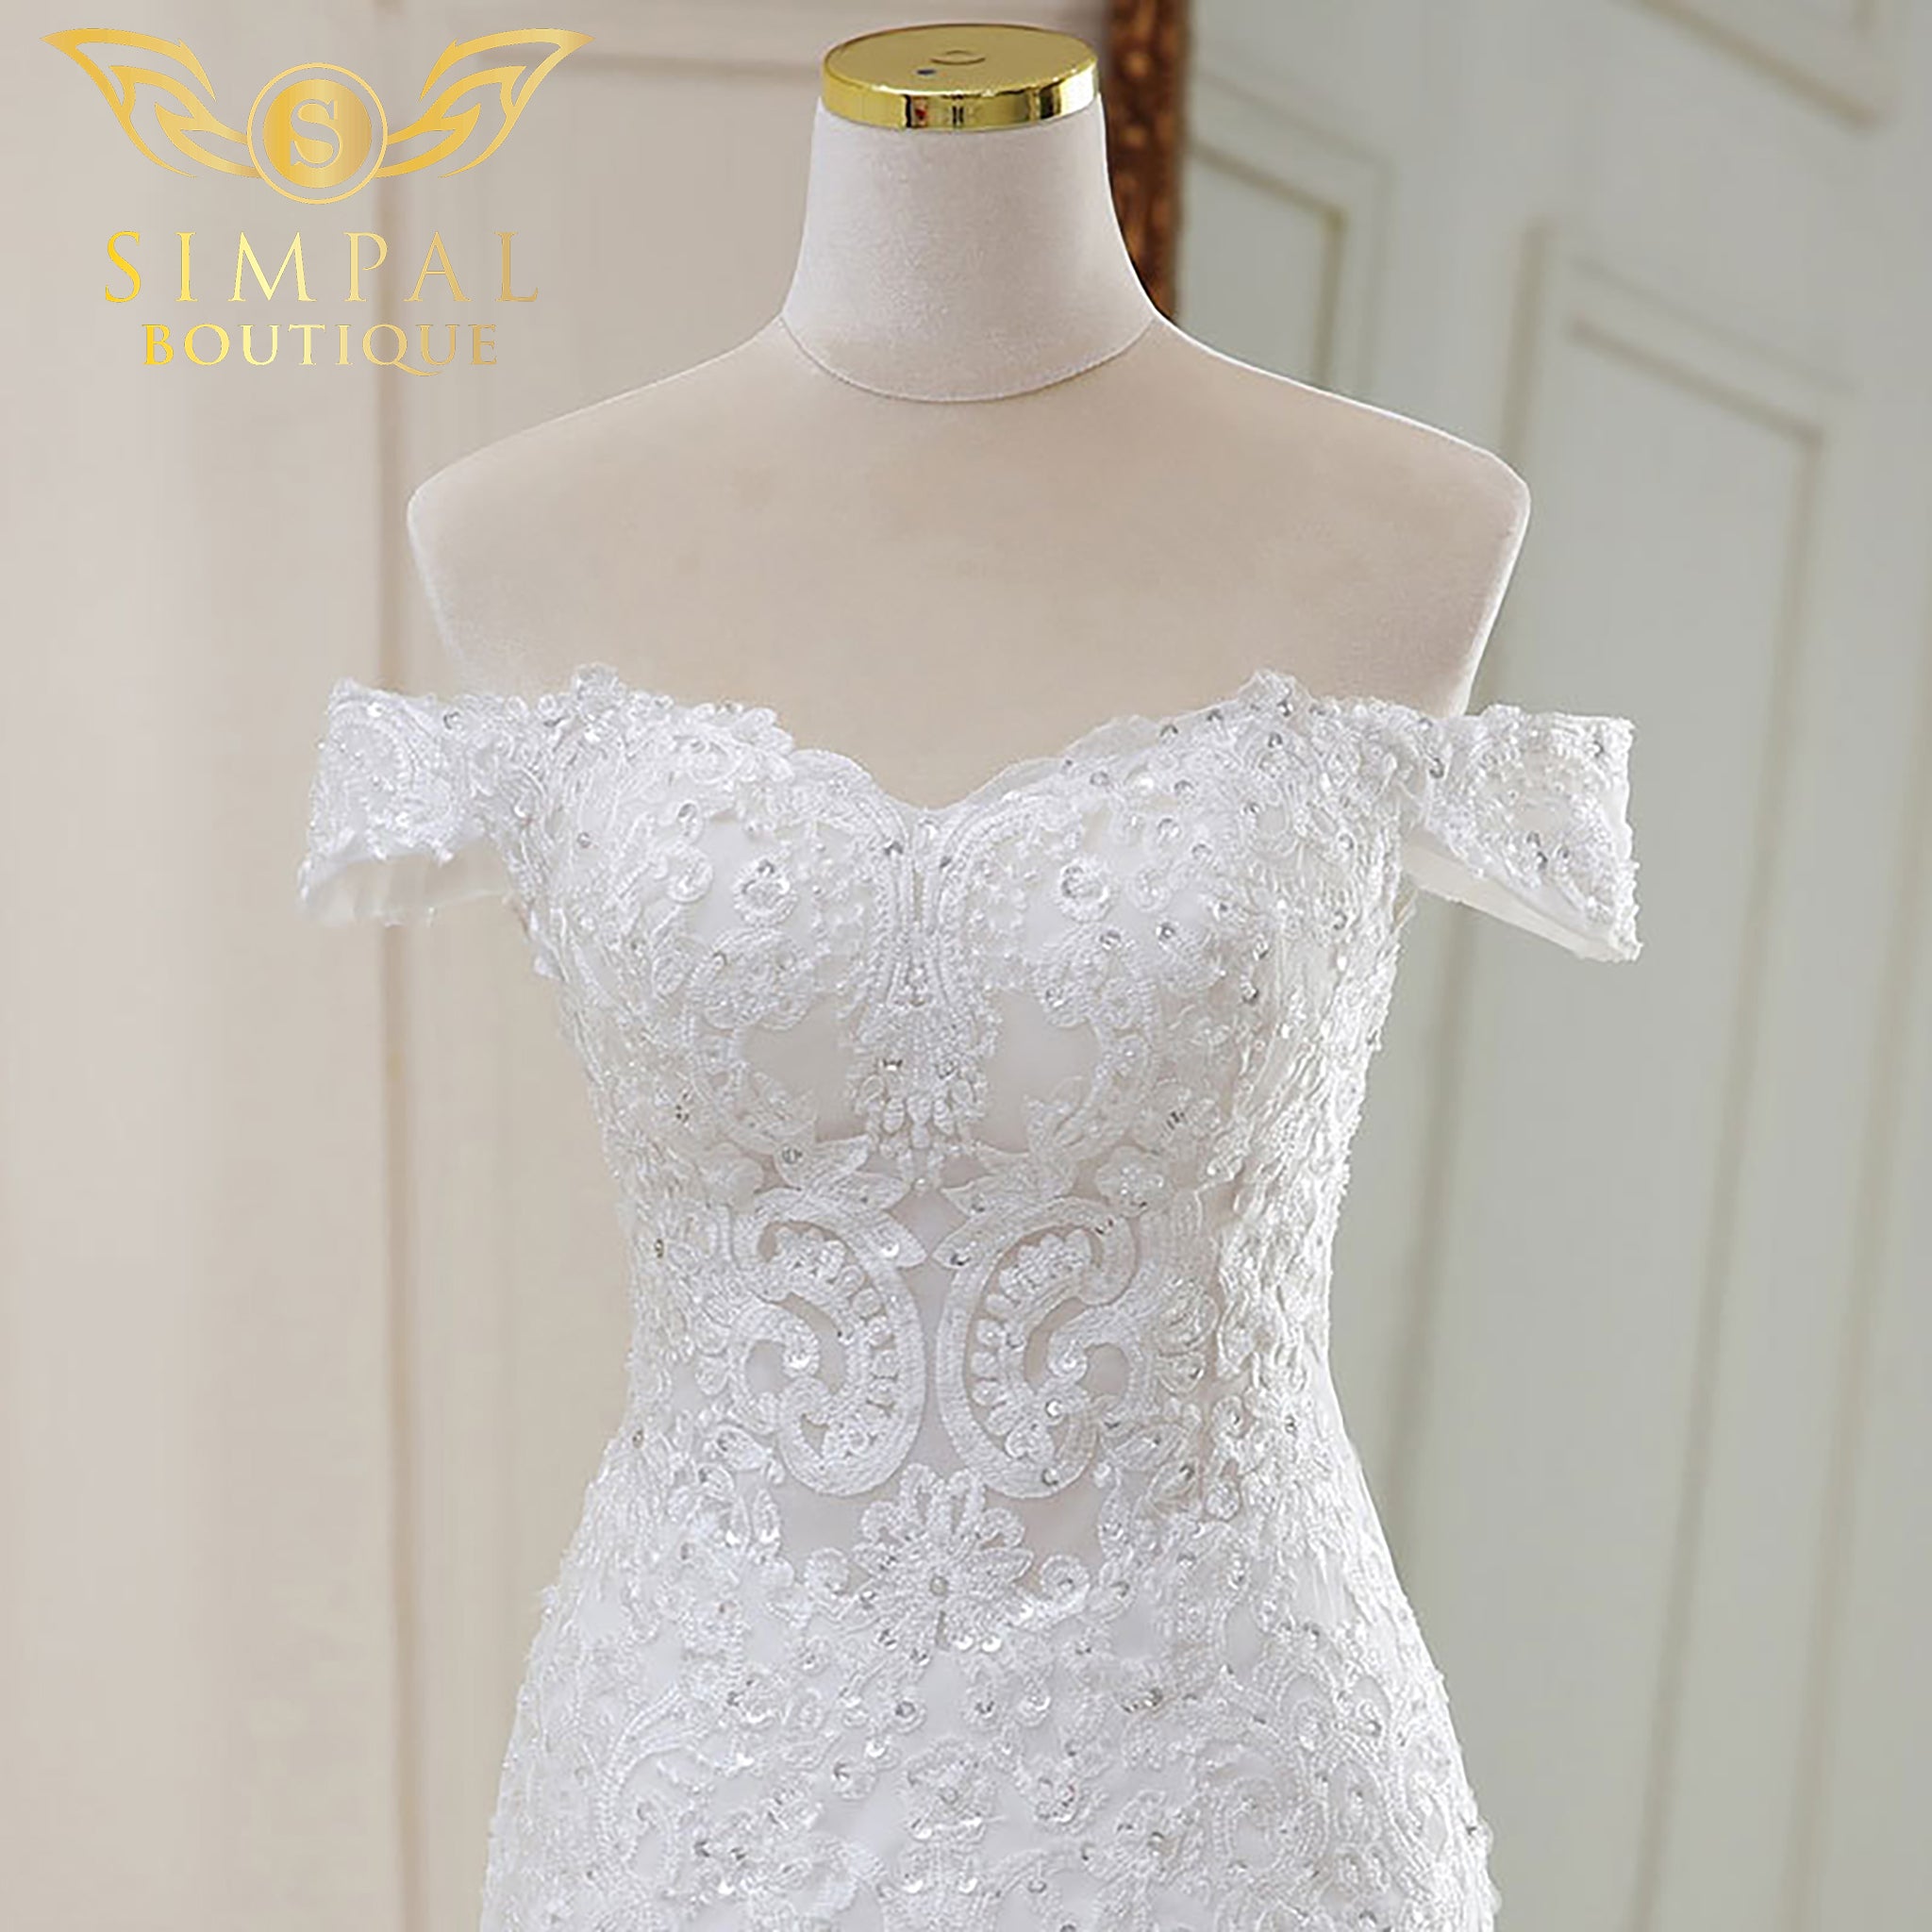 In Store White Temperament Midwaist Long Tail Mermaid Wedding Dress